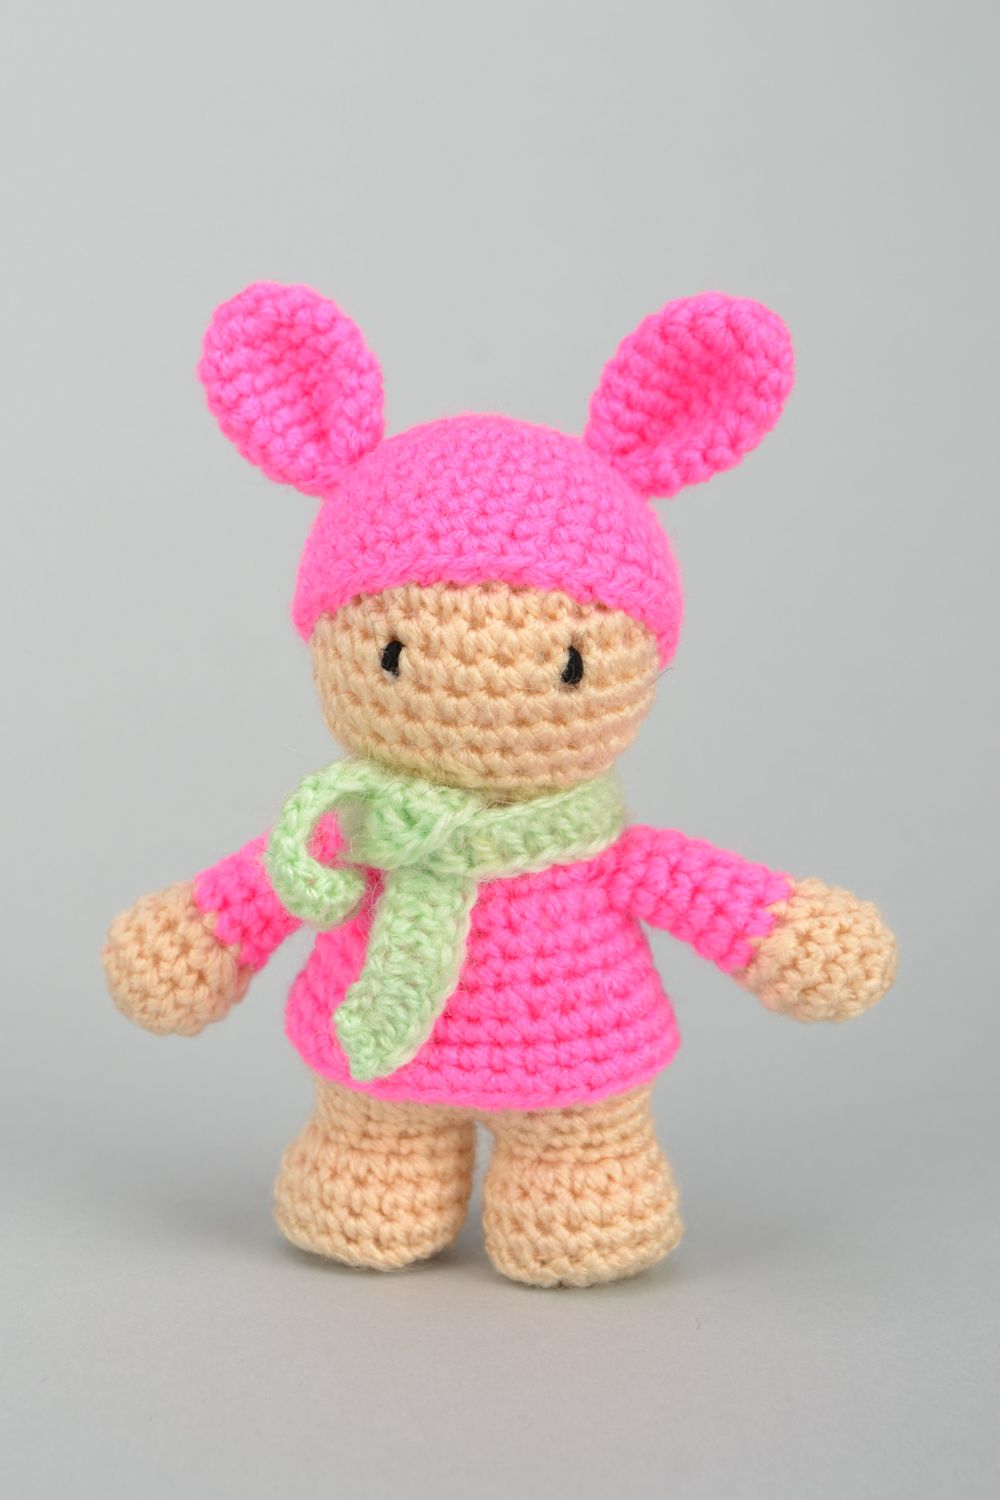 Soft crochet woolen toy doll photo 1